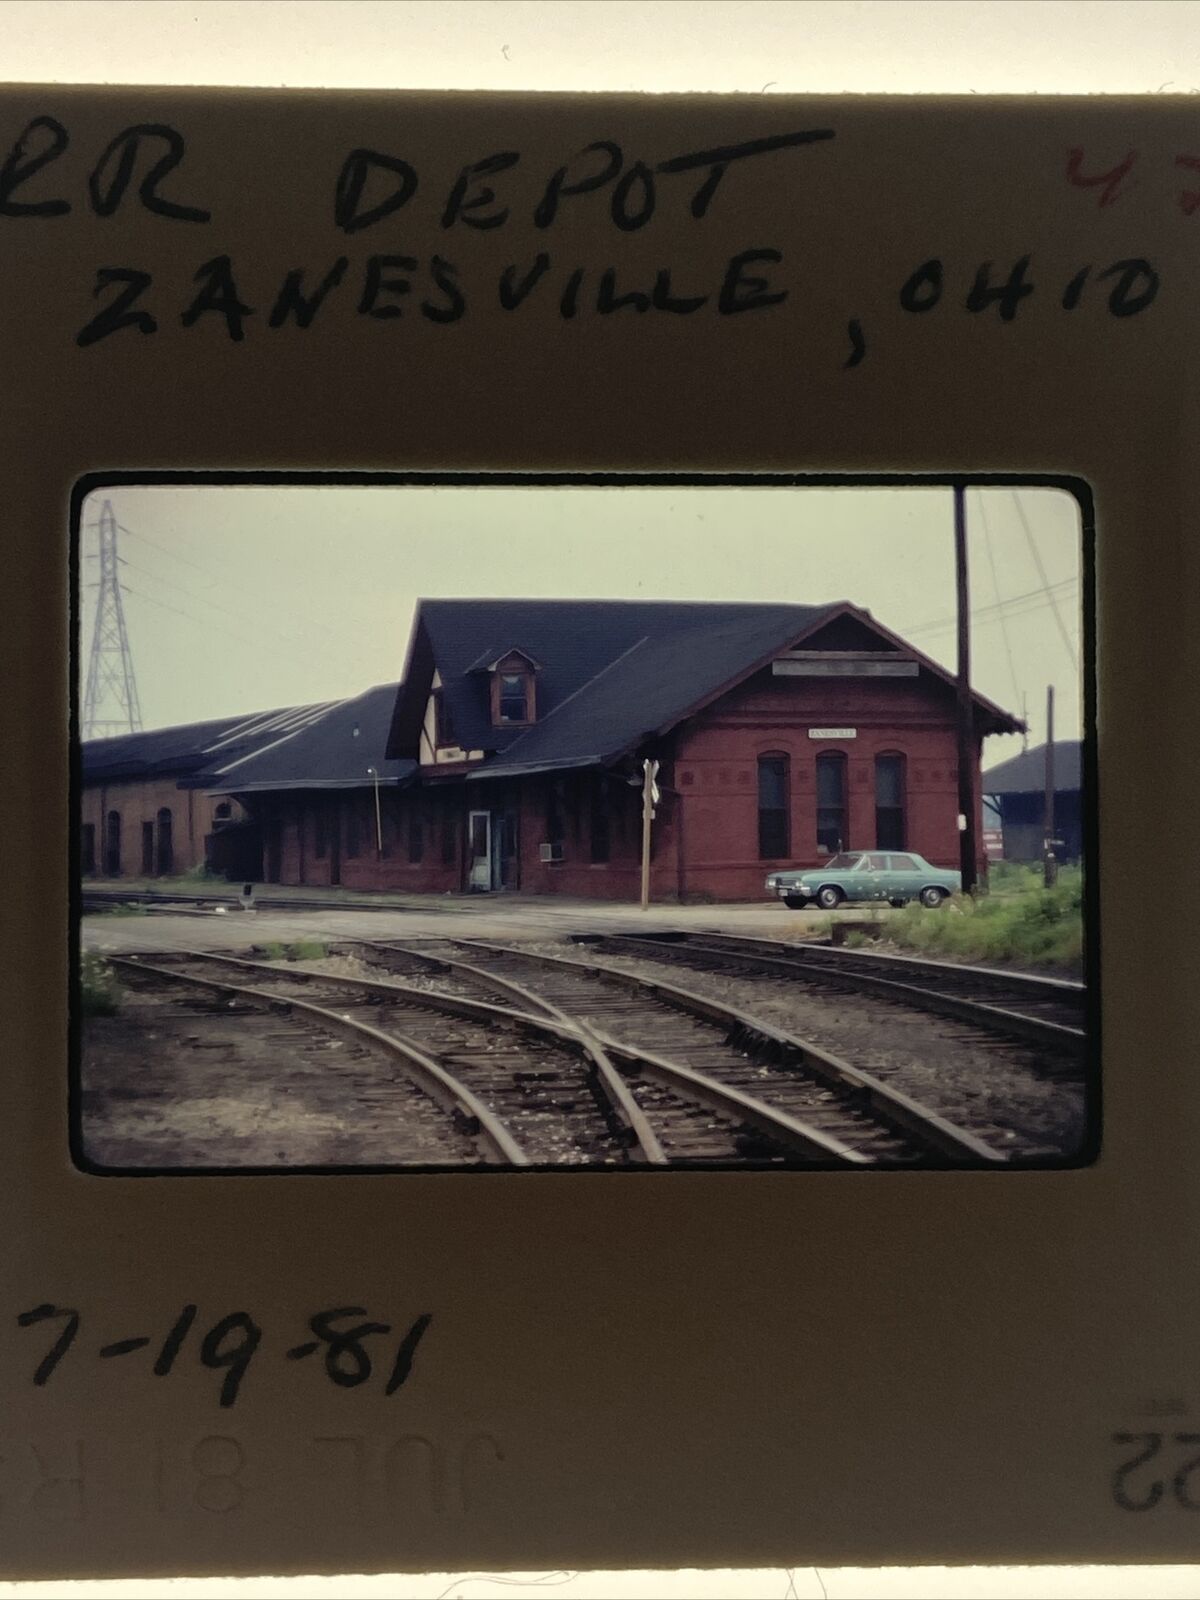 1981 Original 35mm Slide Zanesville Ohio Railroad Depot Kodachrome